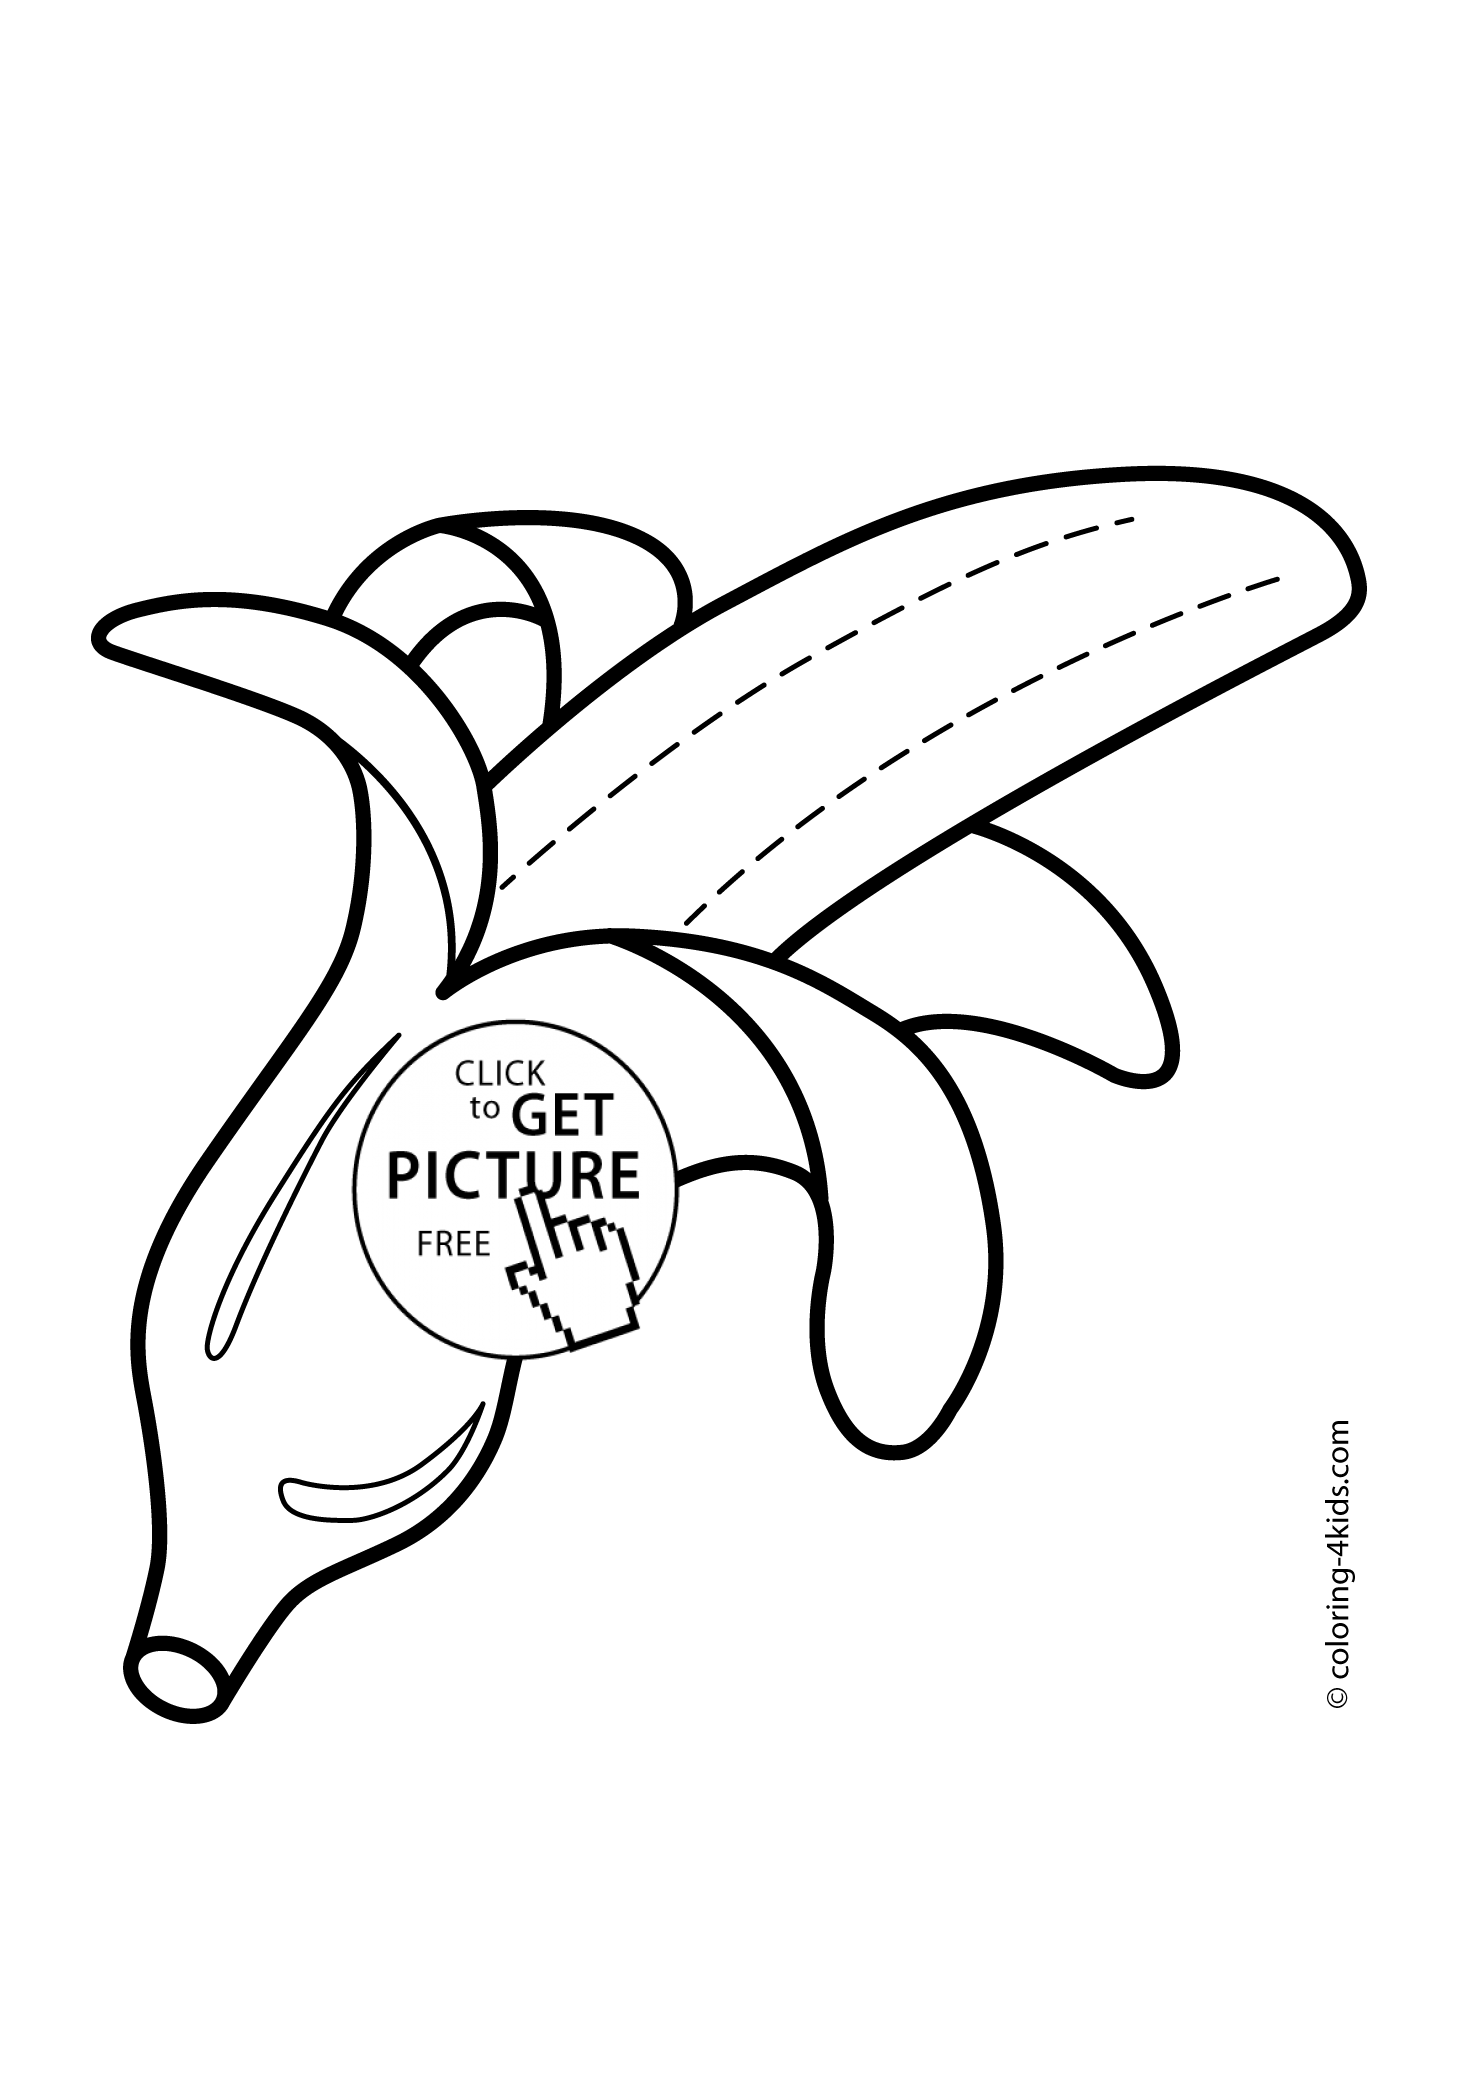 Banana Leaf Drawing at GetDrawings | Free download